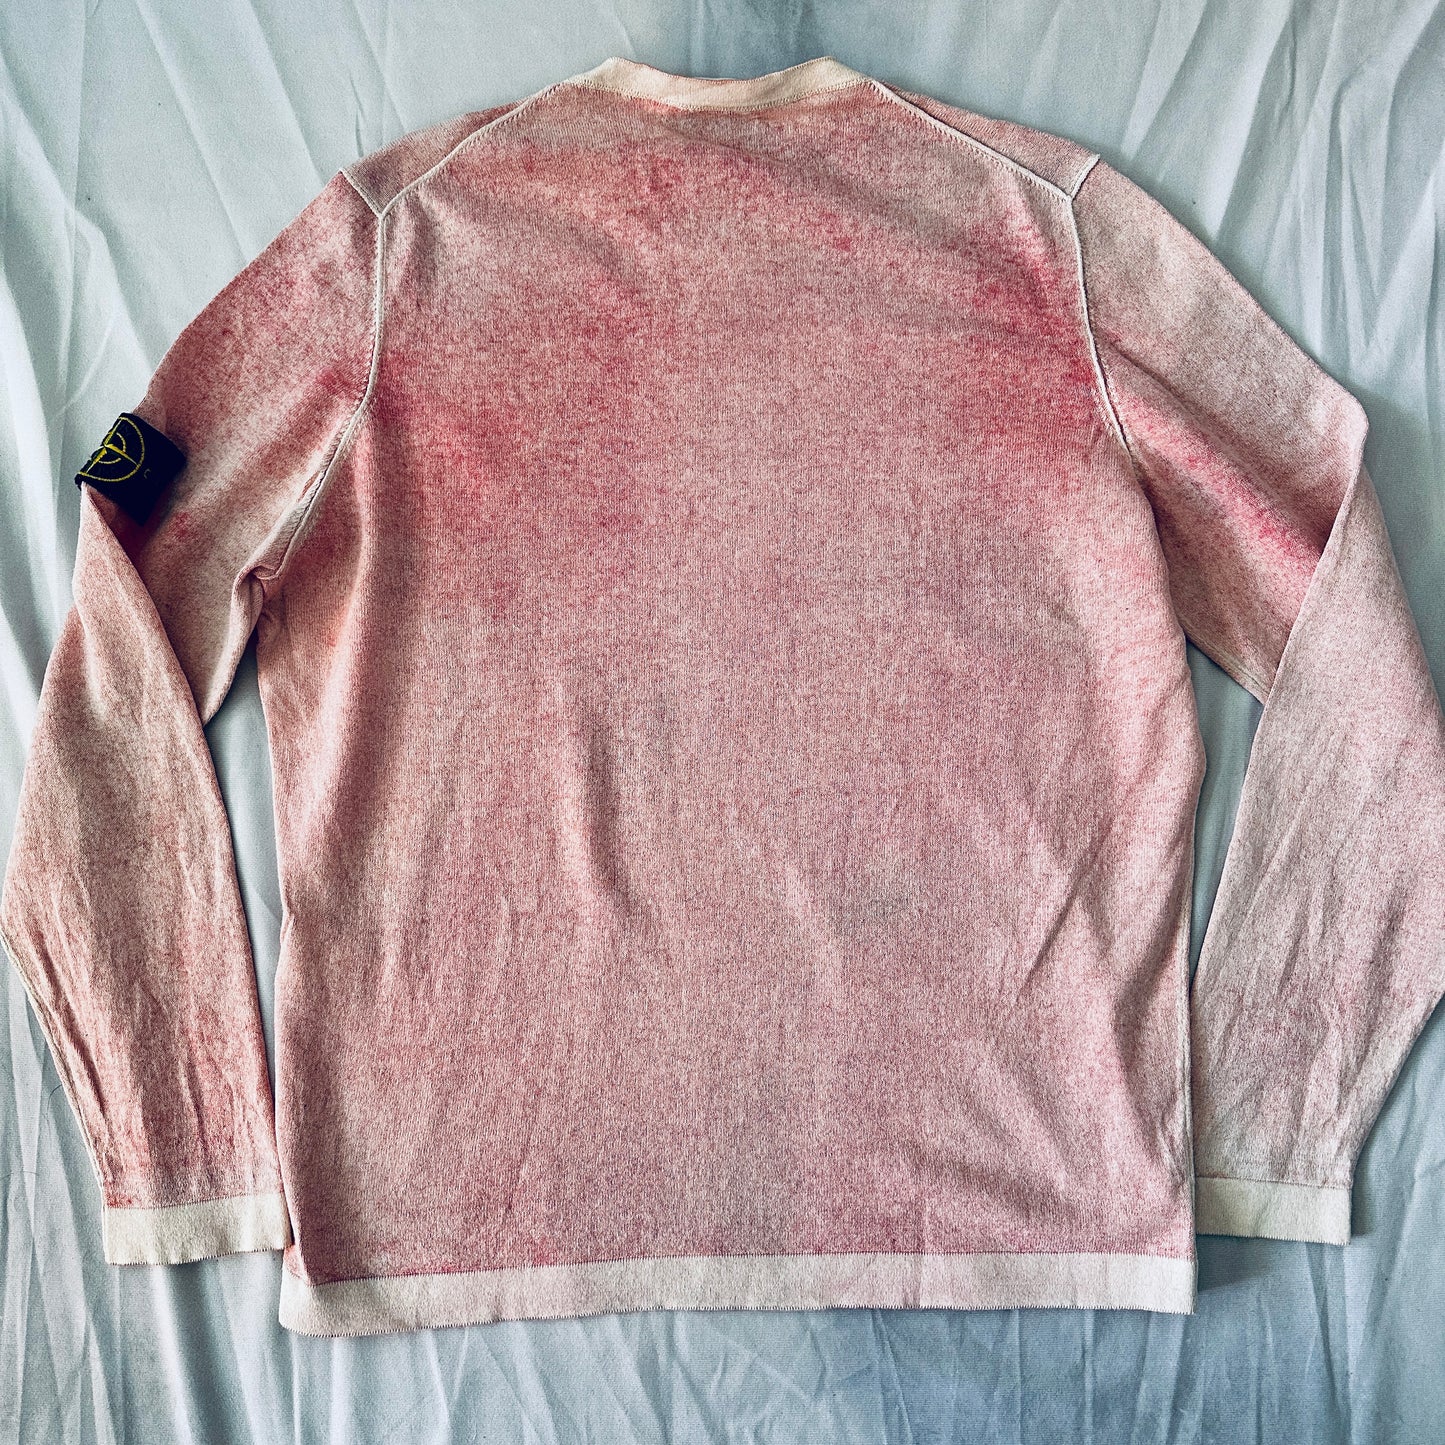 Stone Island Reversible Knit Sweatshirt 2017 - XXL